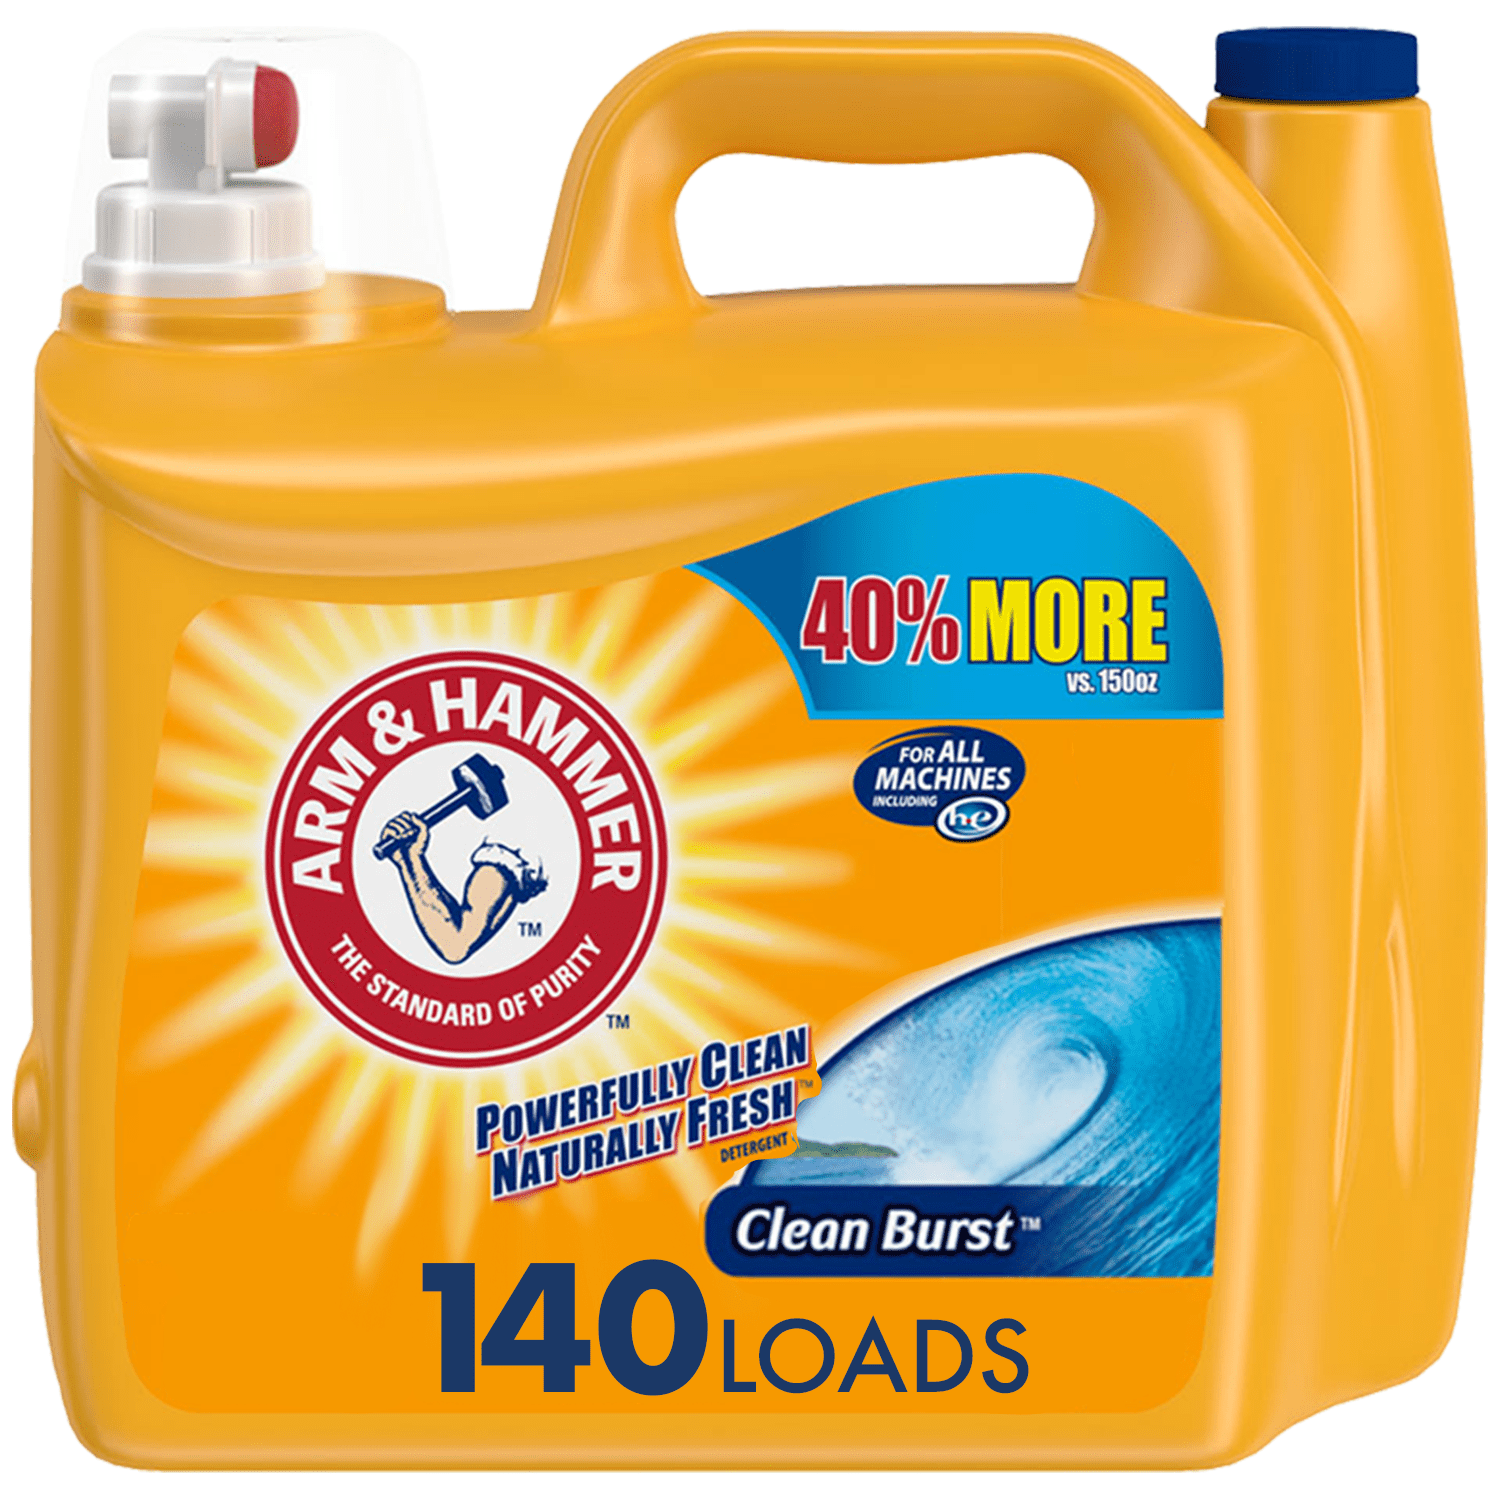 arm-hammer-clean-burst-140-loads-liquid-laundry-detergent-210-fl-oz